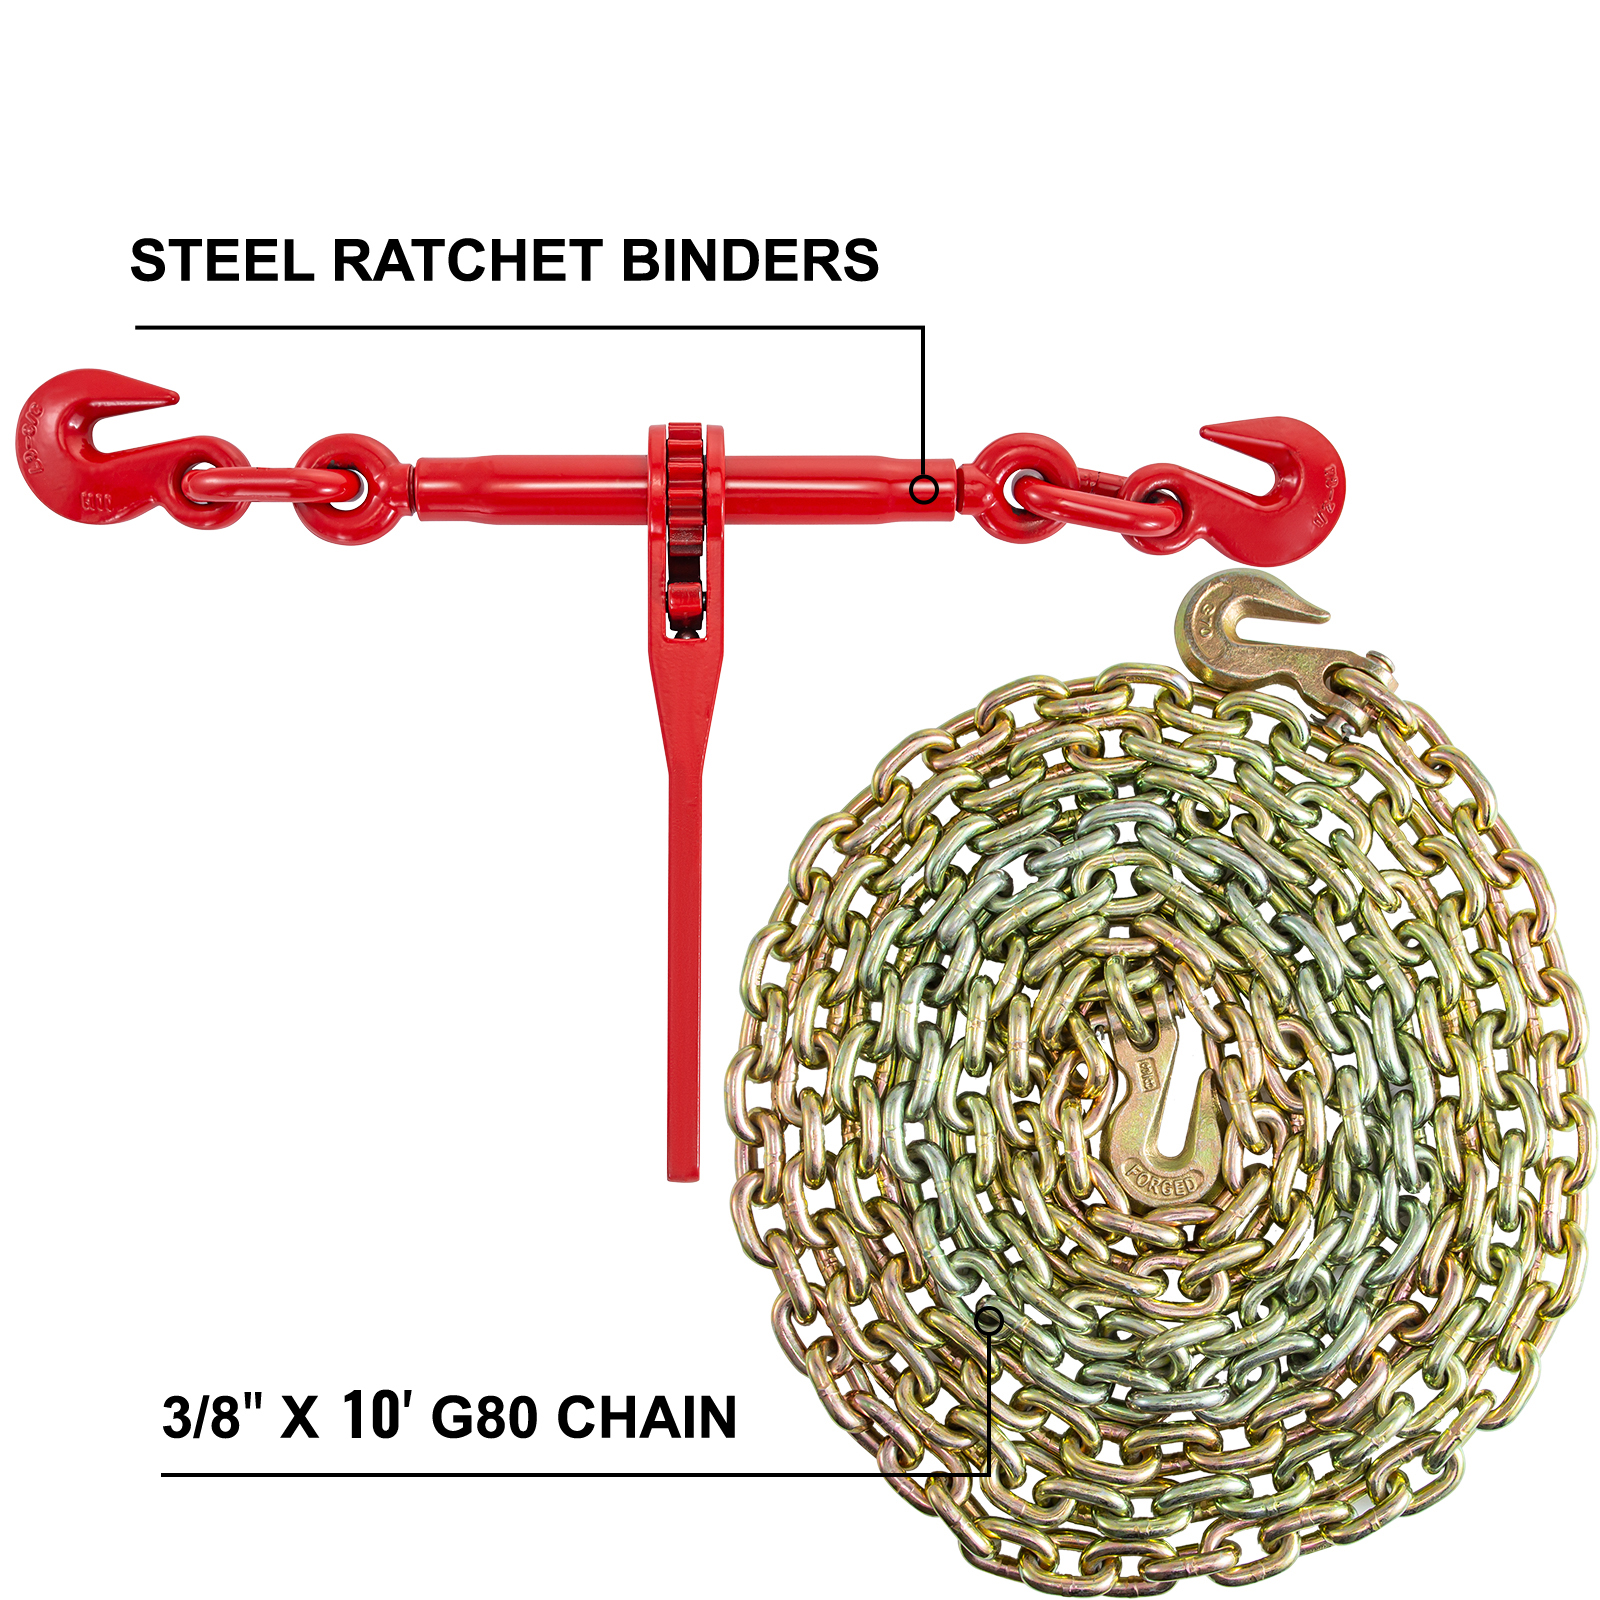 VEVOR Ratchet Chain Binder, 5/16-3/8 Heavy Duty Load Binders